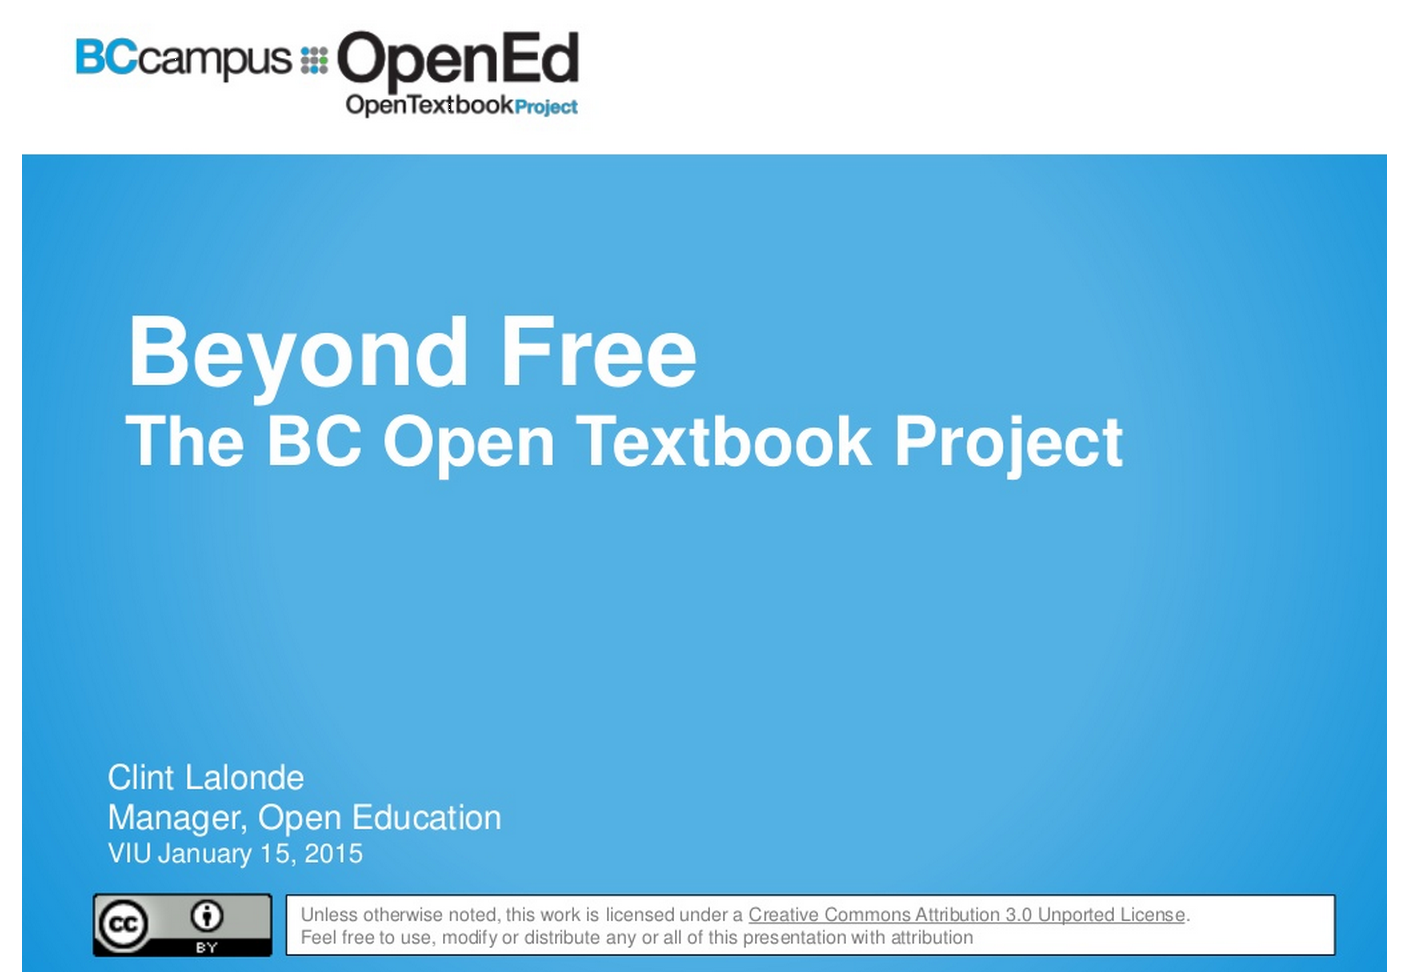 BCcampus Open Textbook Project Presentation at VIU